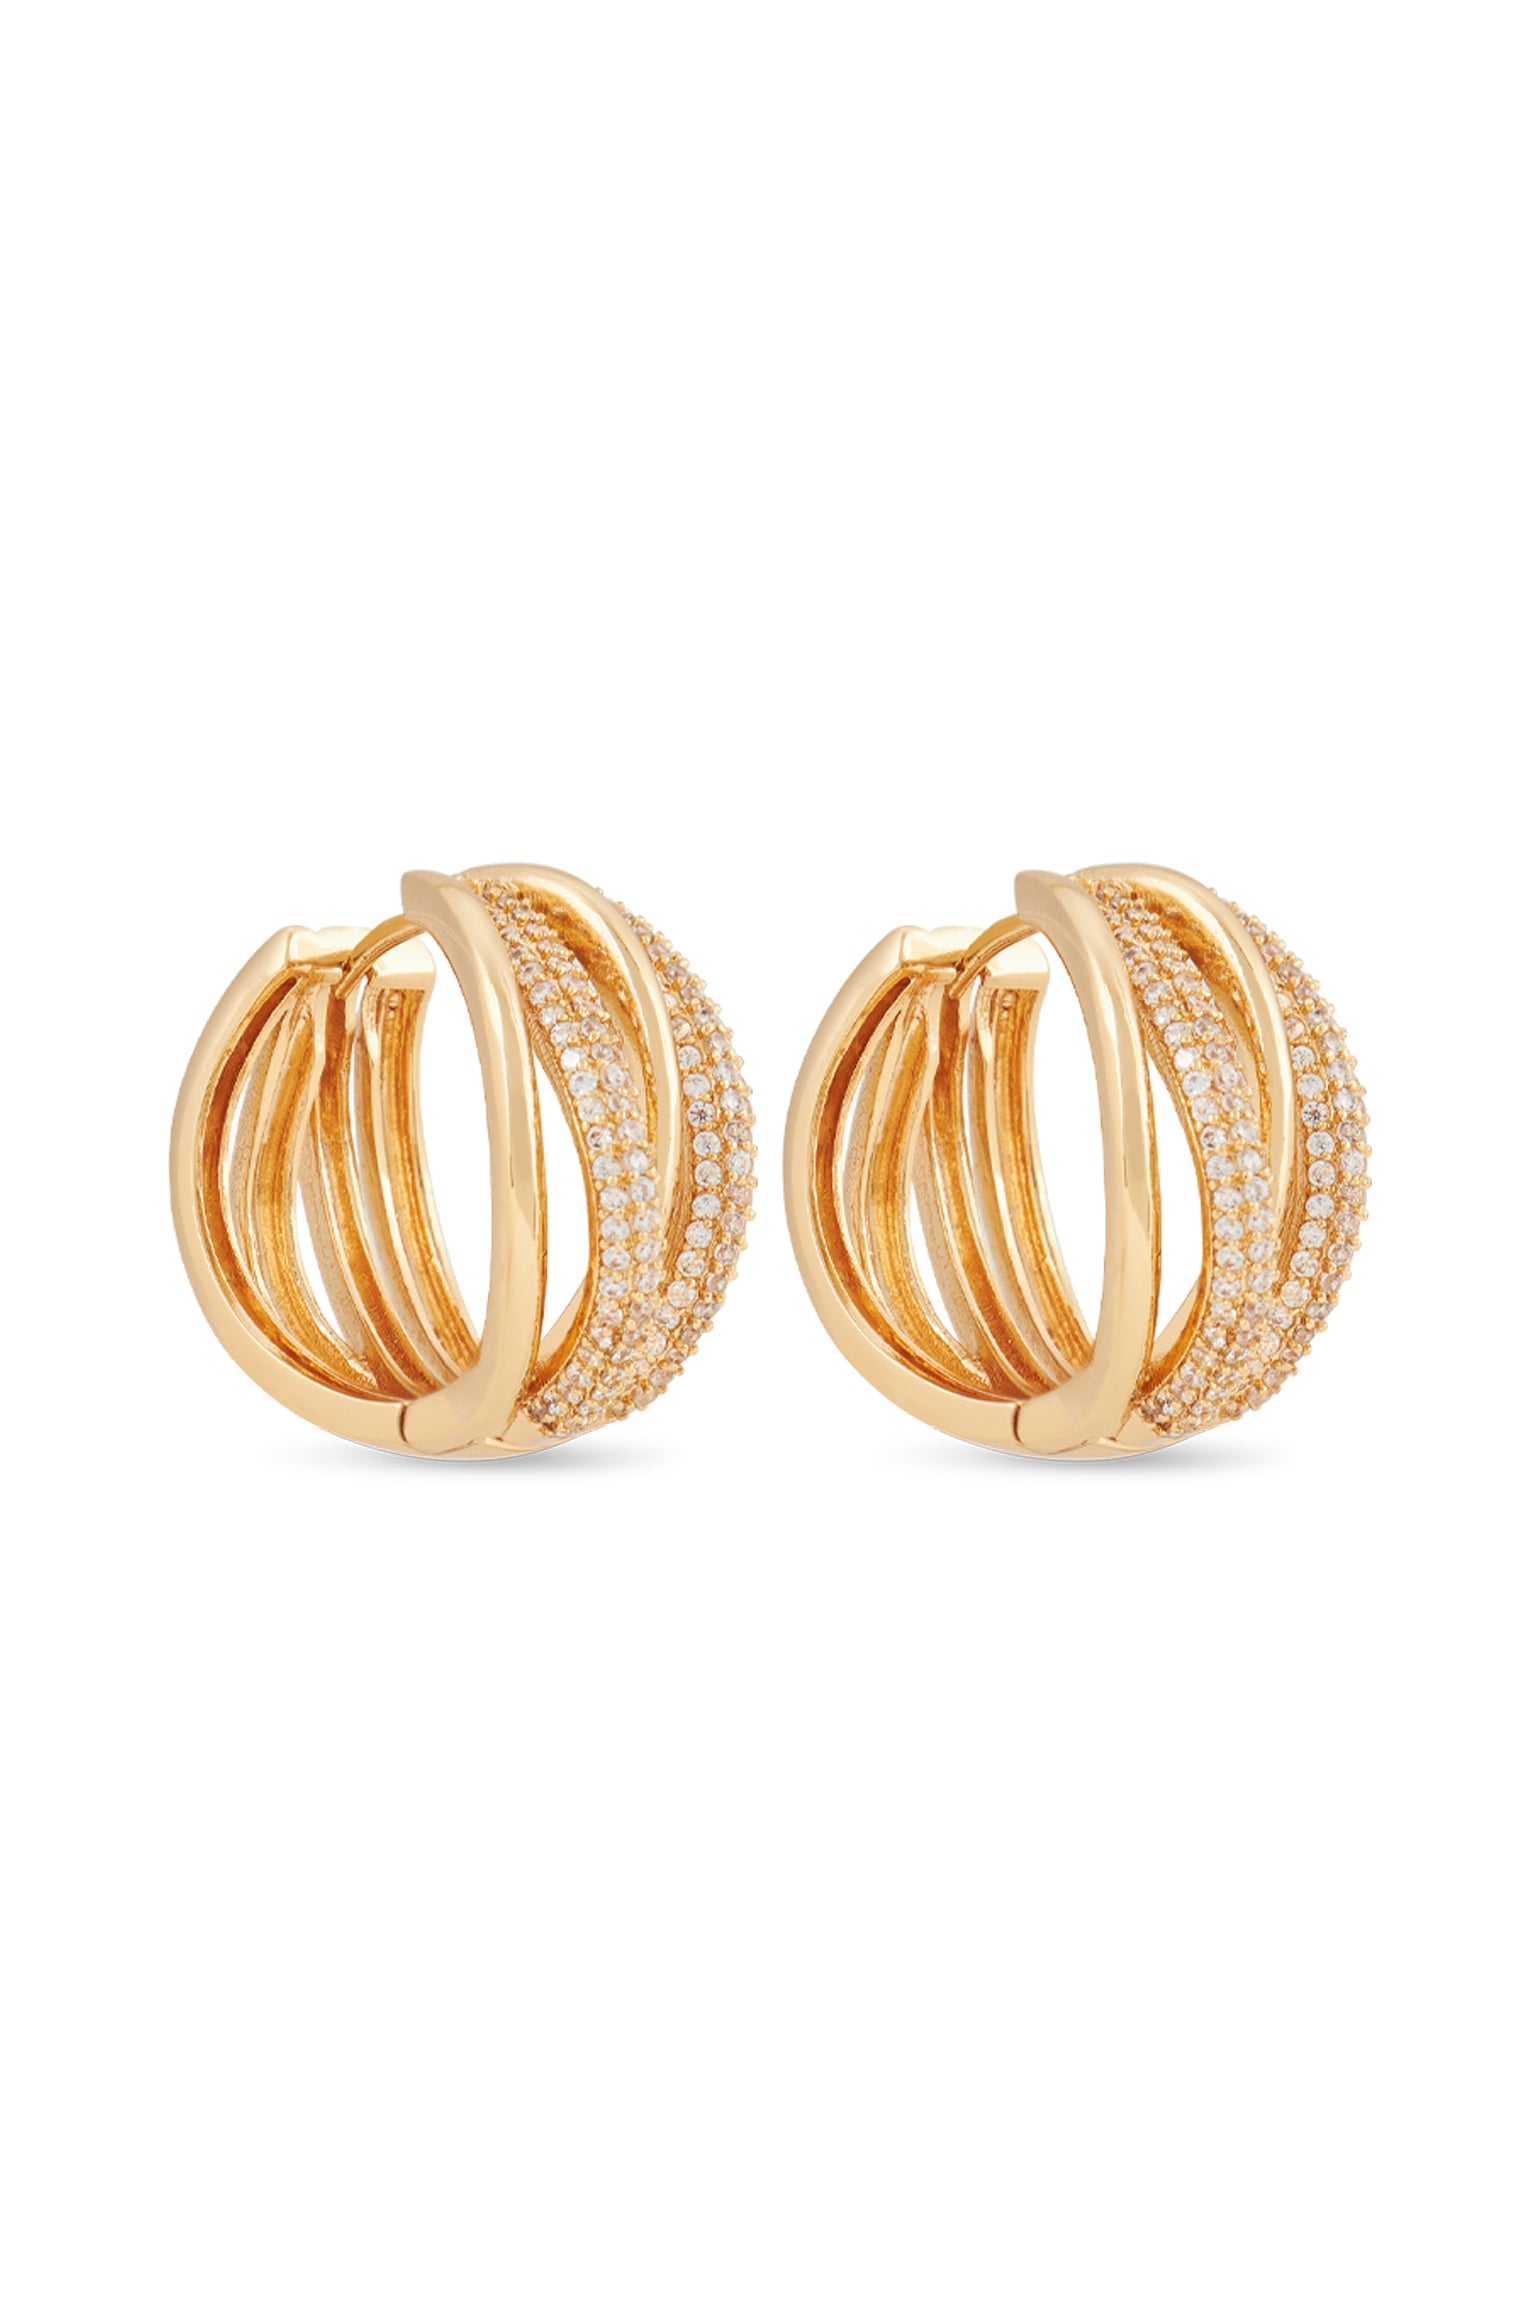 MELUSINA BIJOUX Gold Braided Wire Earrings